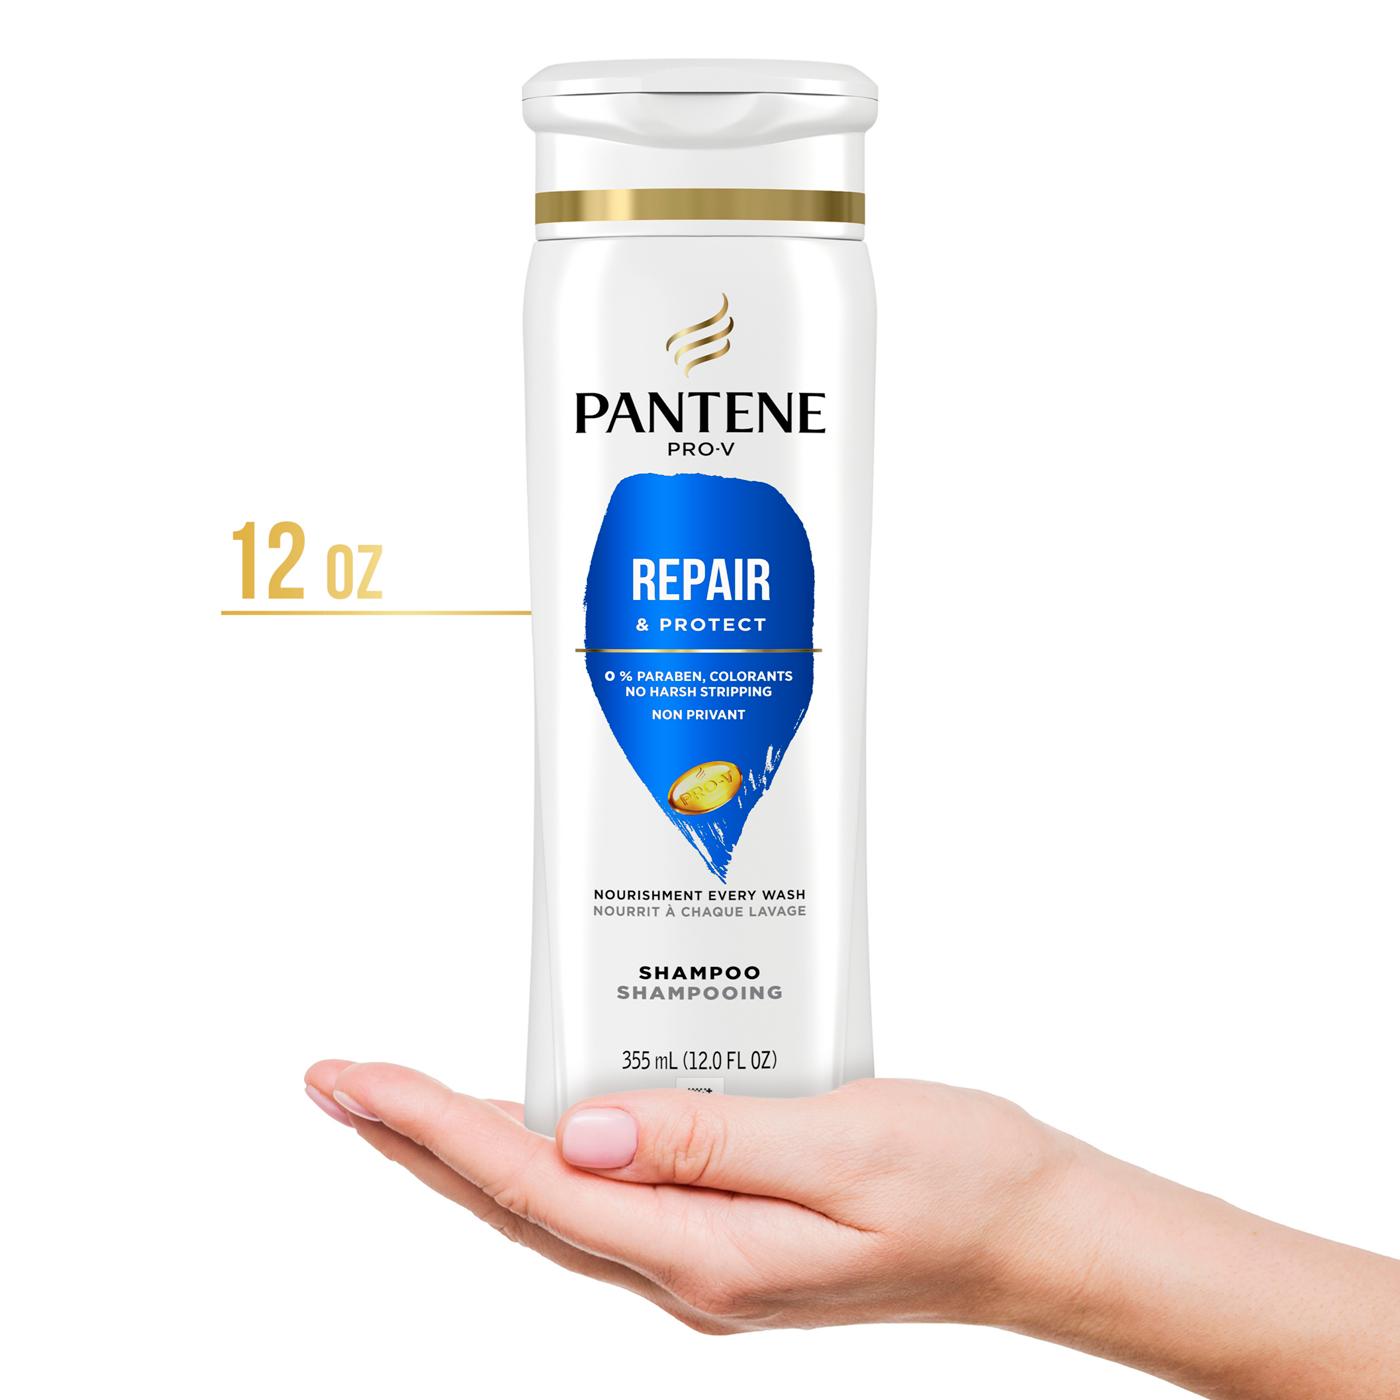 Pantene Pro-V Repair & Protect Shampoo + Conditioner; image 2 of 11